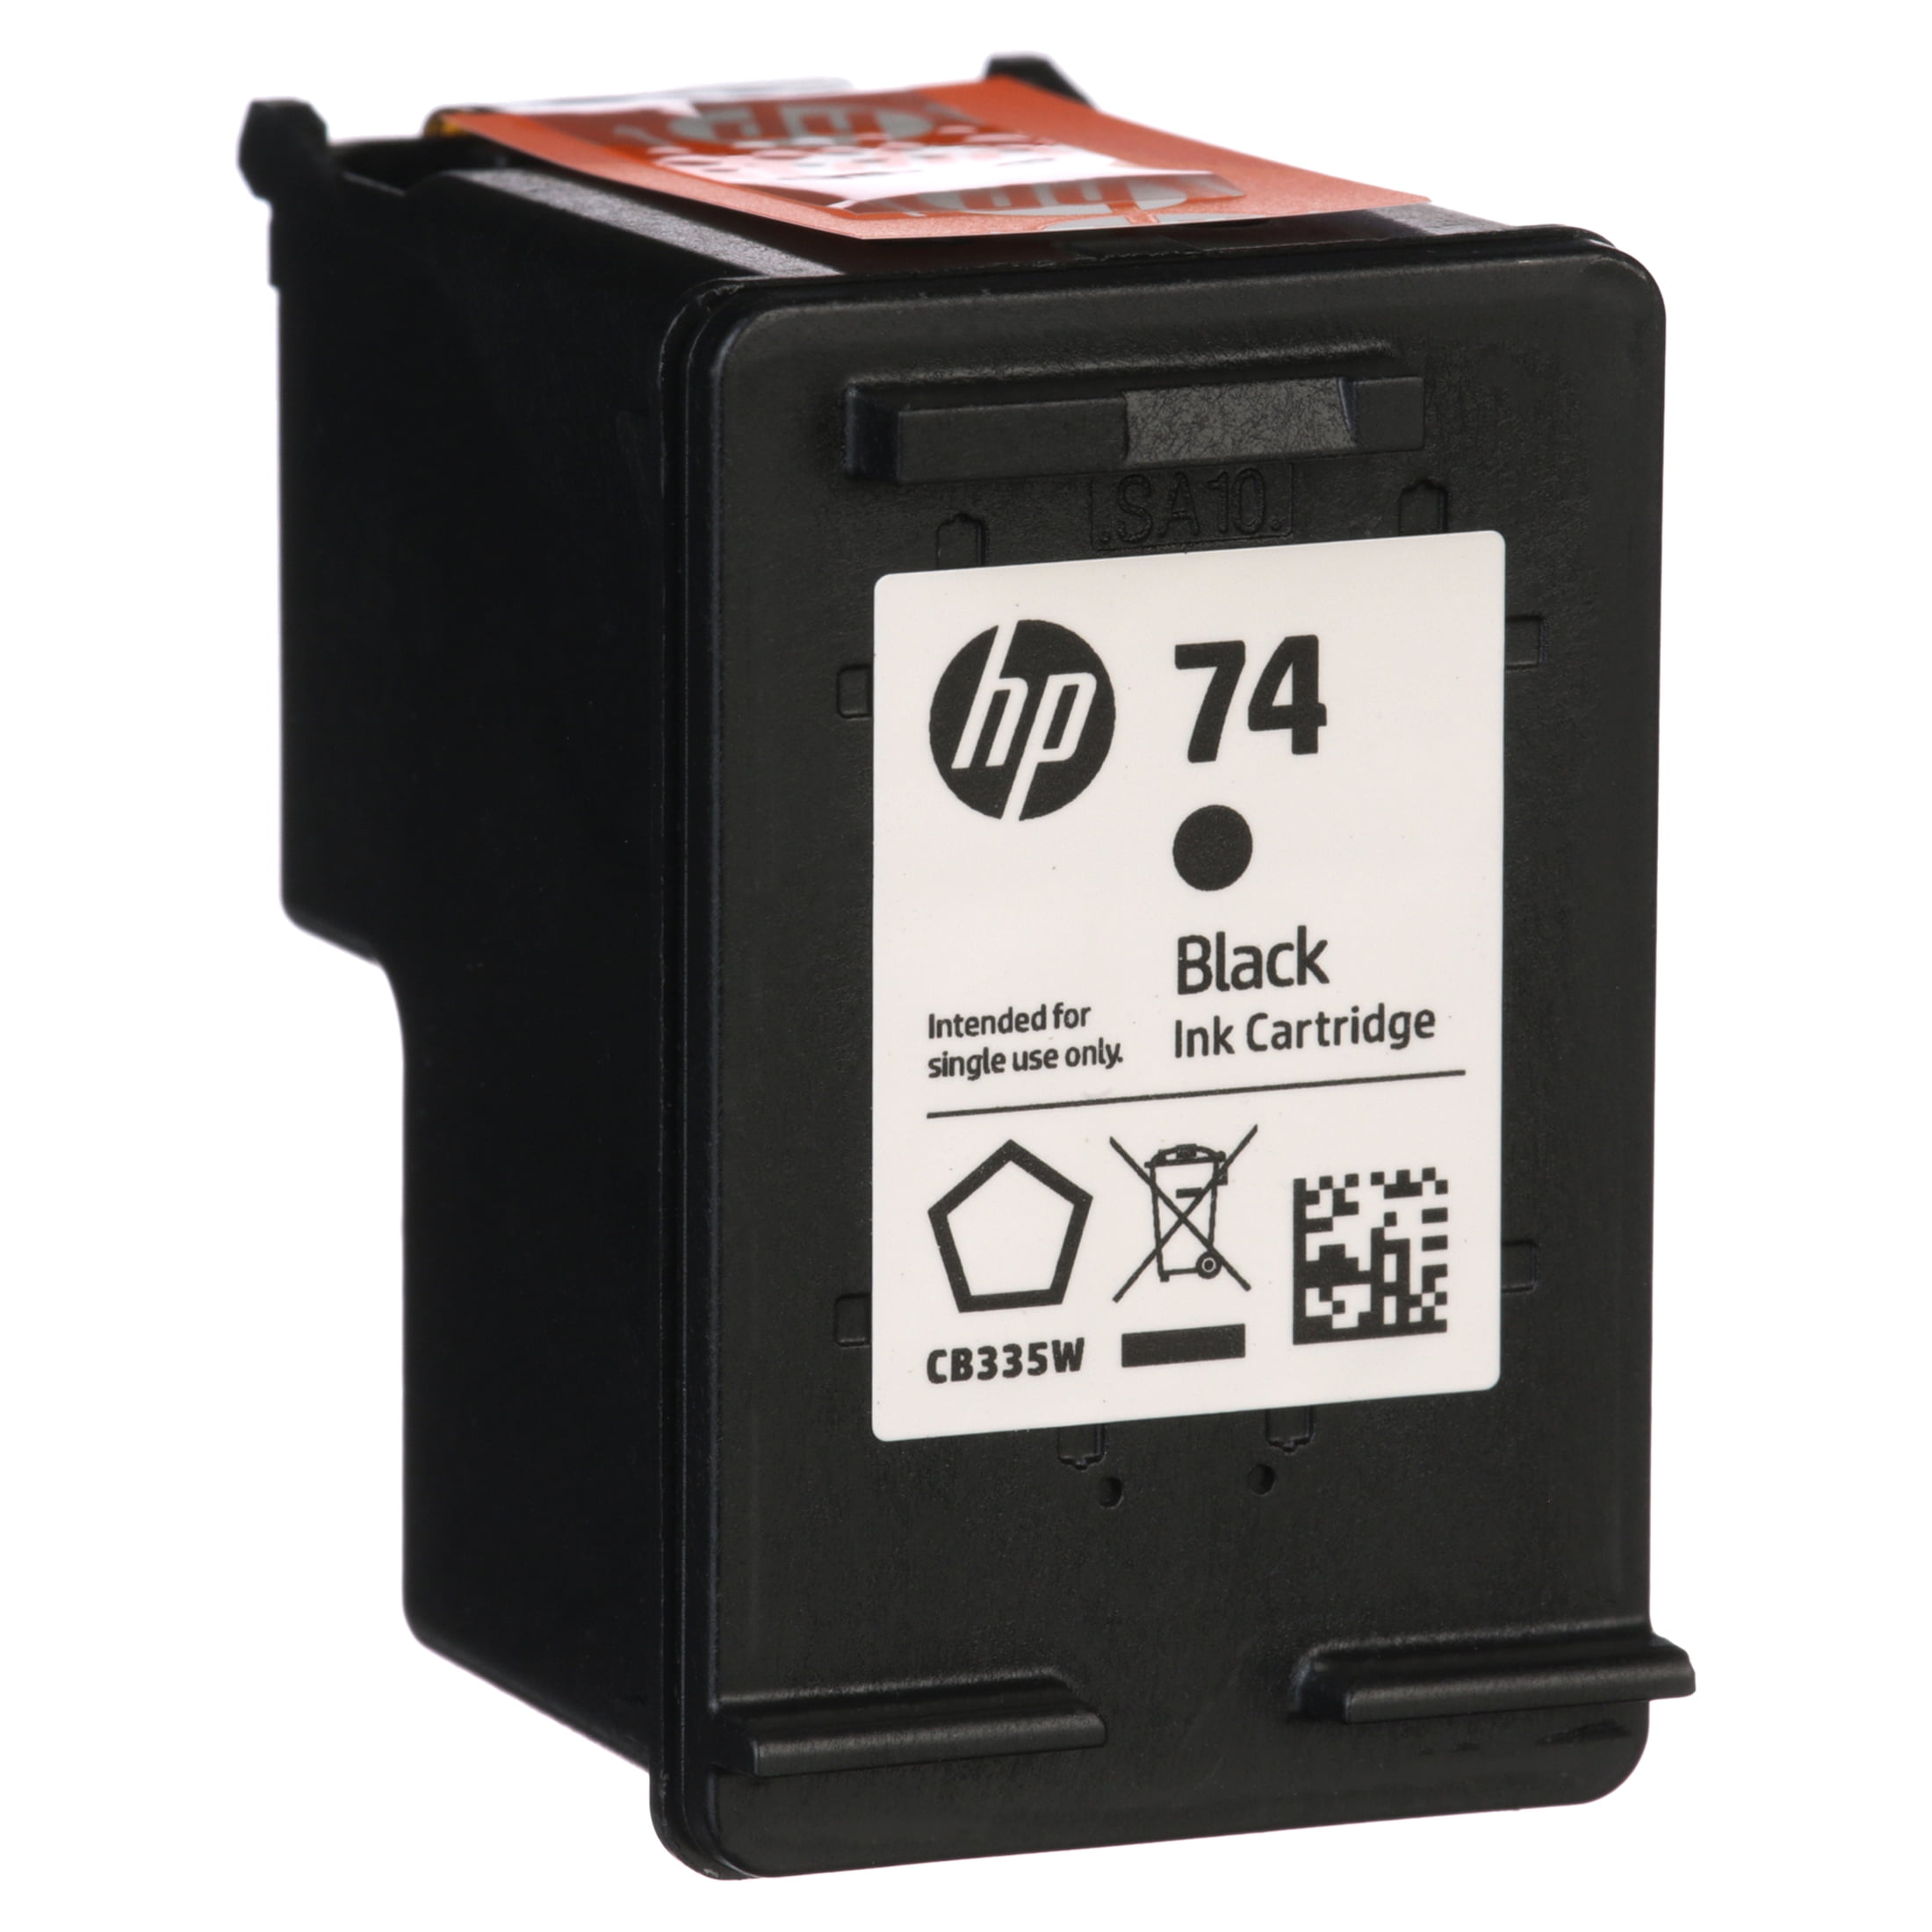 High Yield Black Ink Cartridge for HP CB336WN (HP 74XL) – The